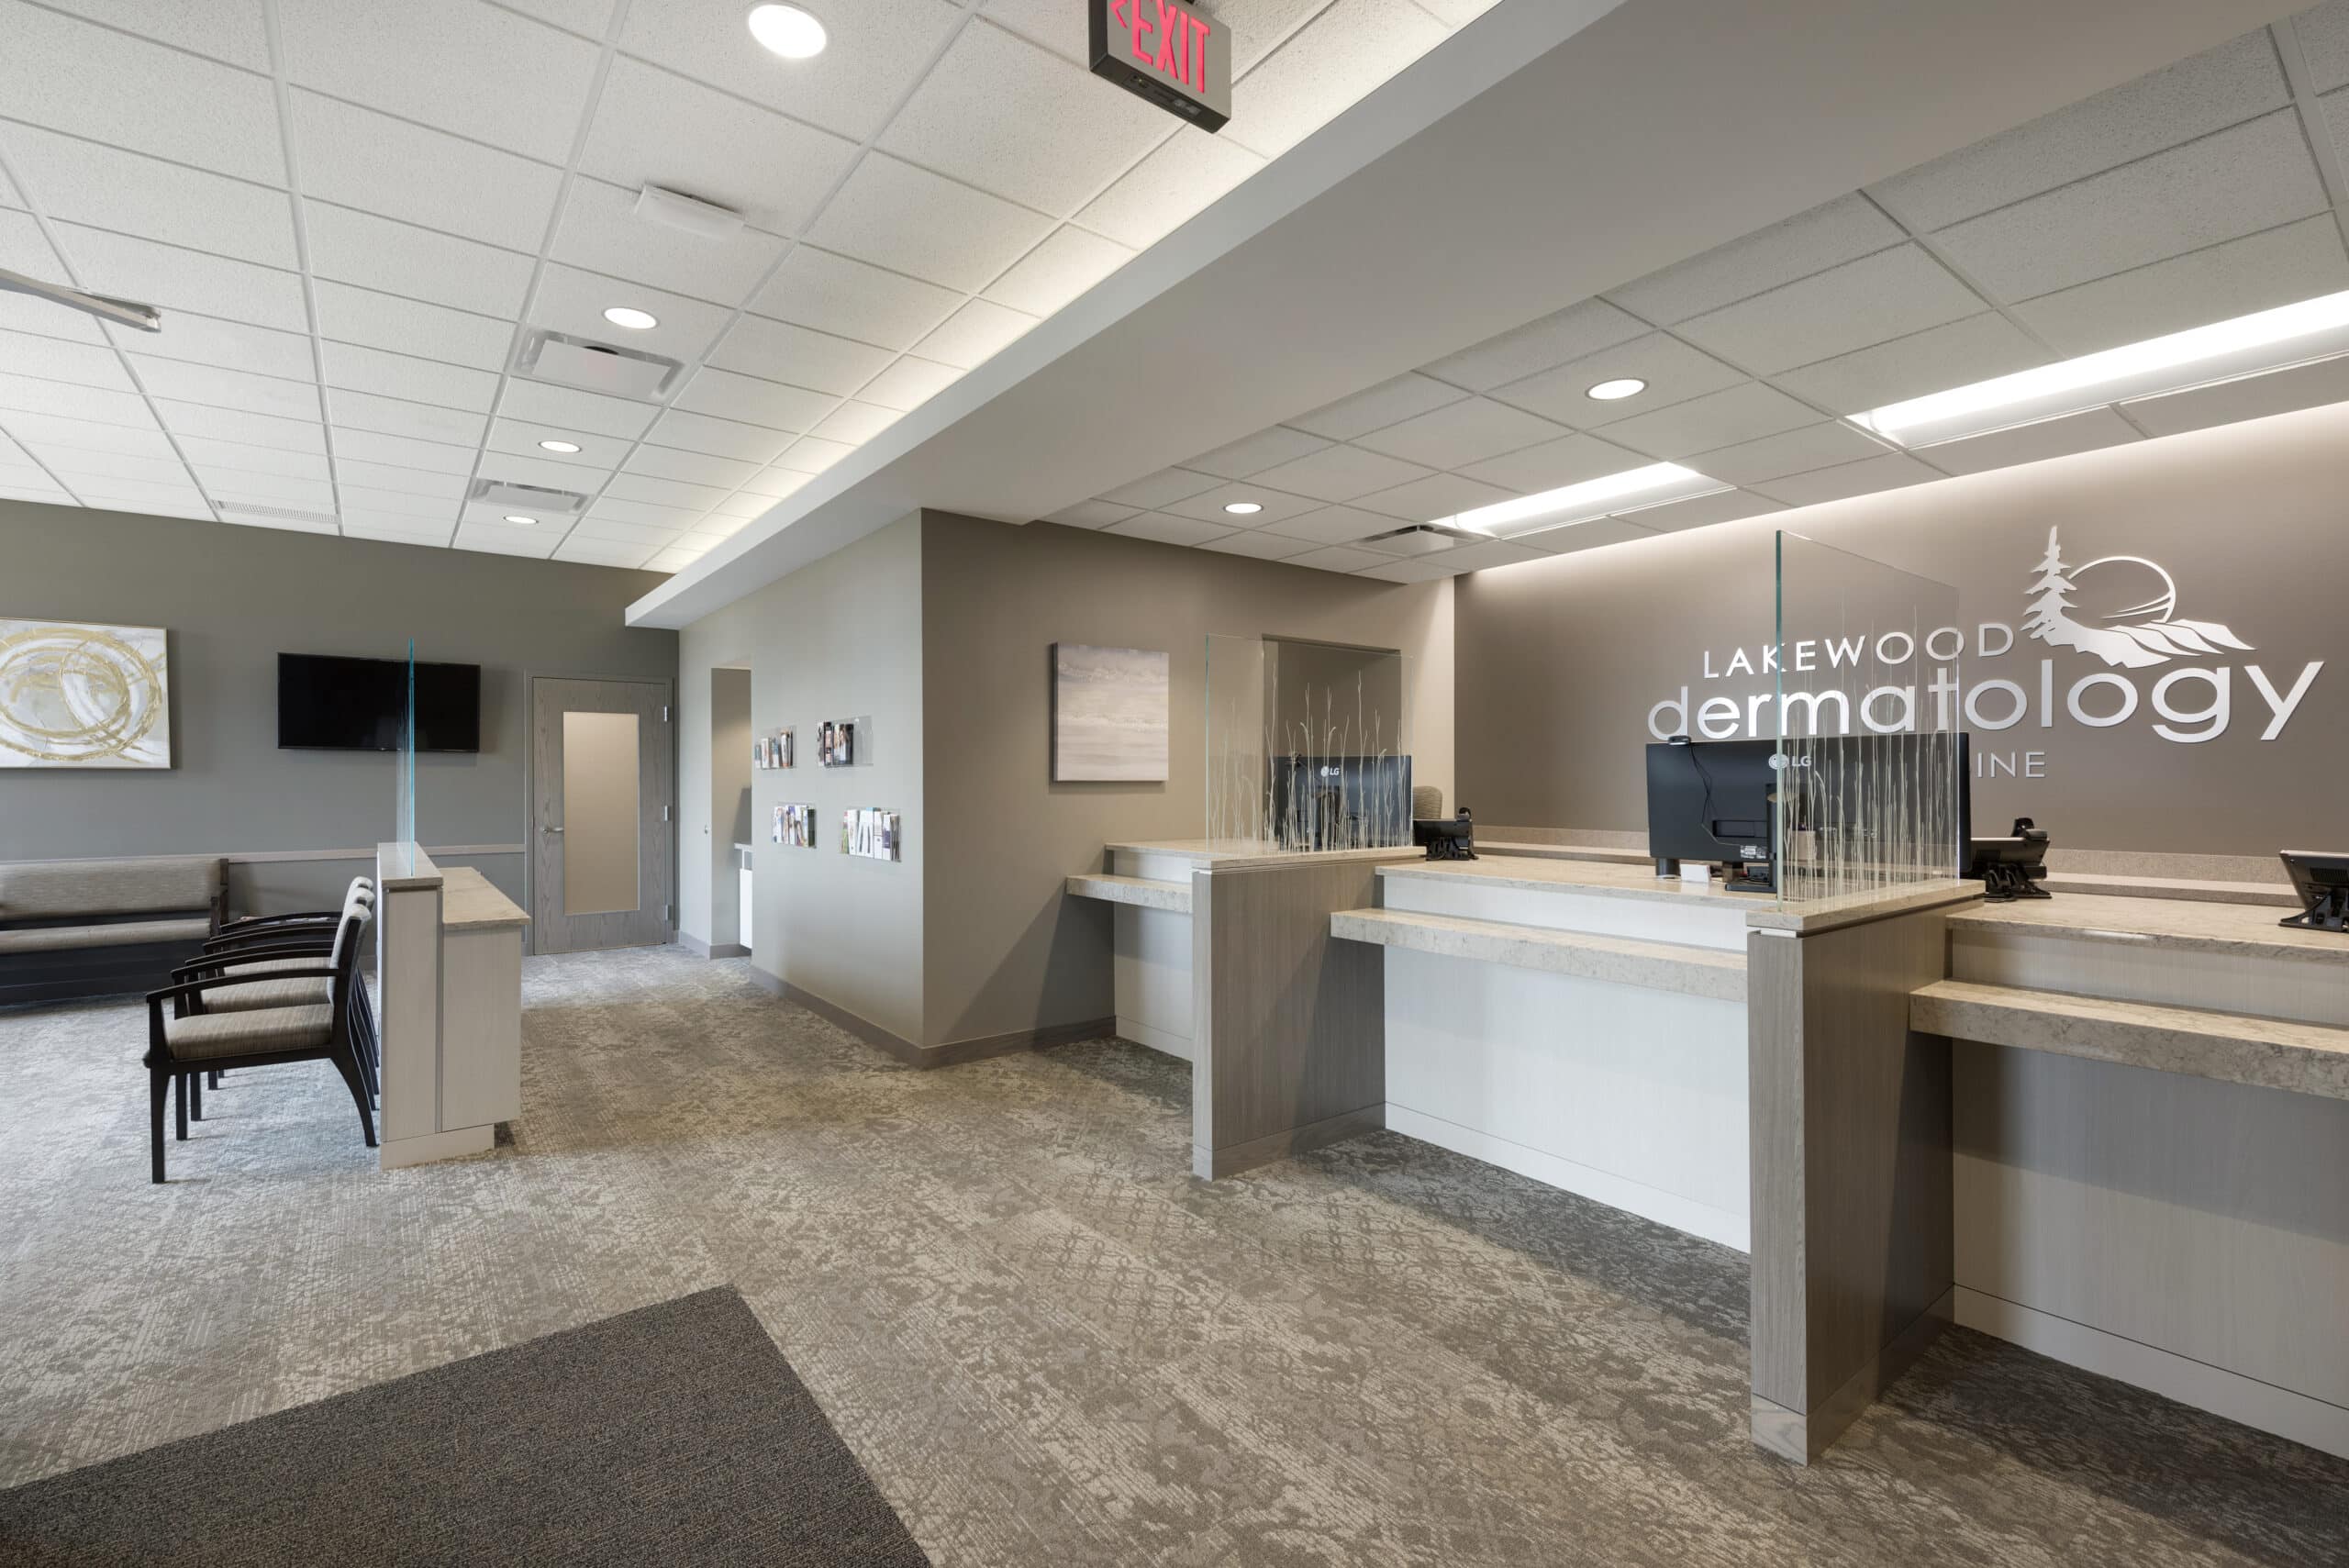 Lakewood Dermatology reception and waiting area